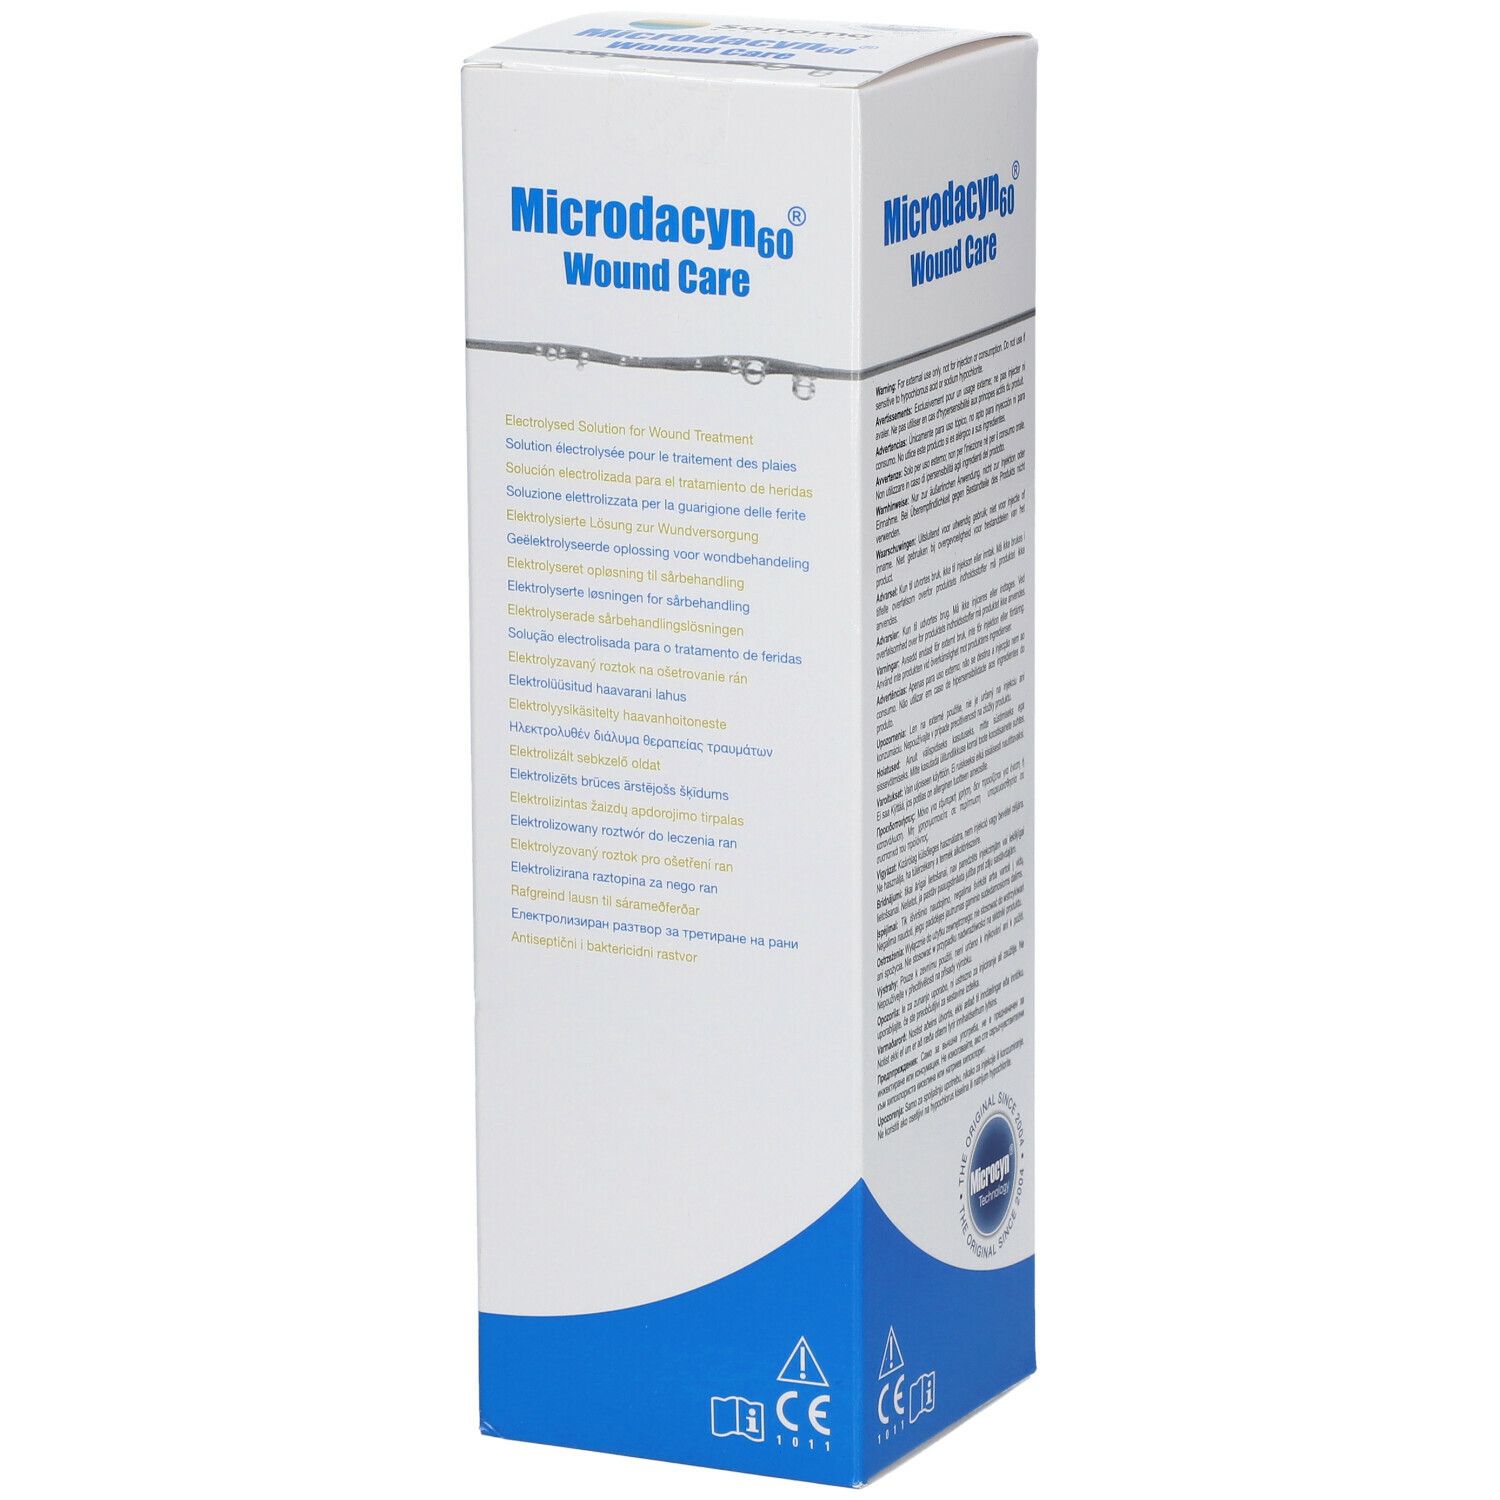 Microdacyn 60® Wound Care